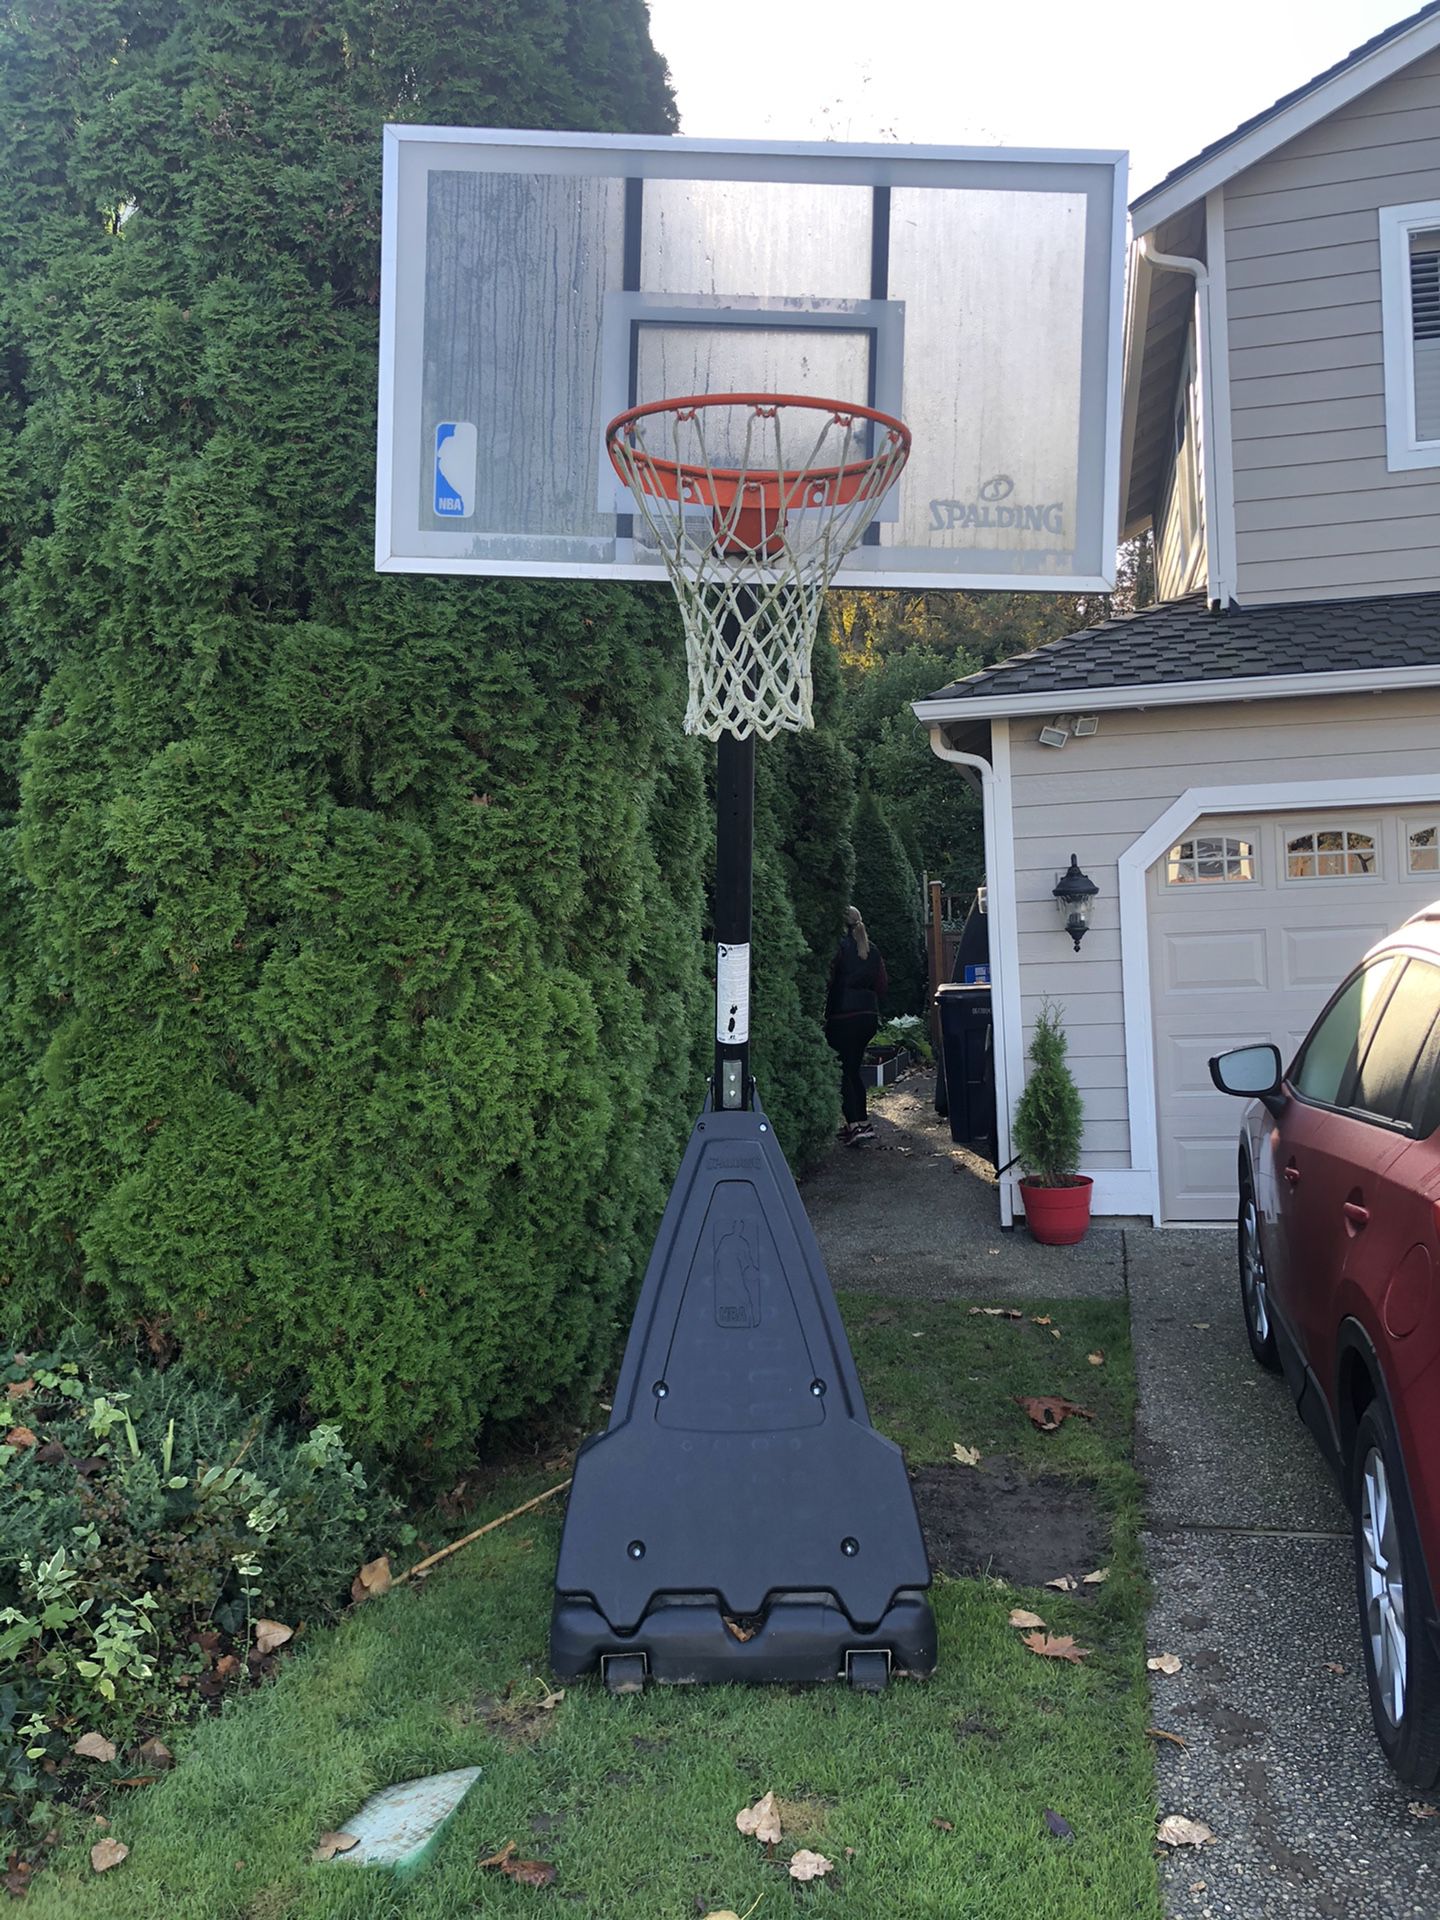 Adjustable Spalding Basketball Hoop